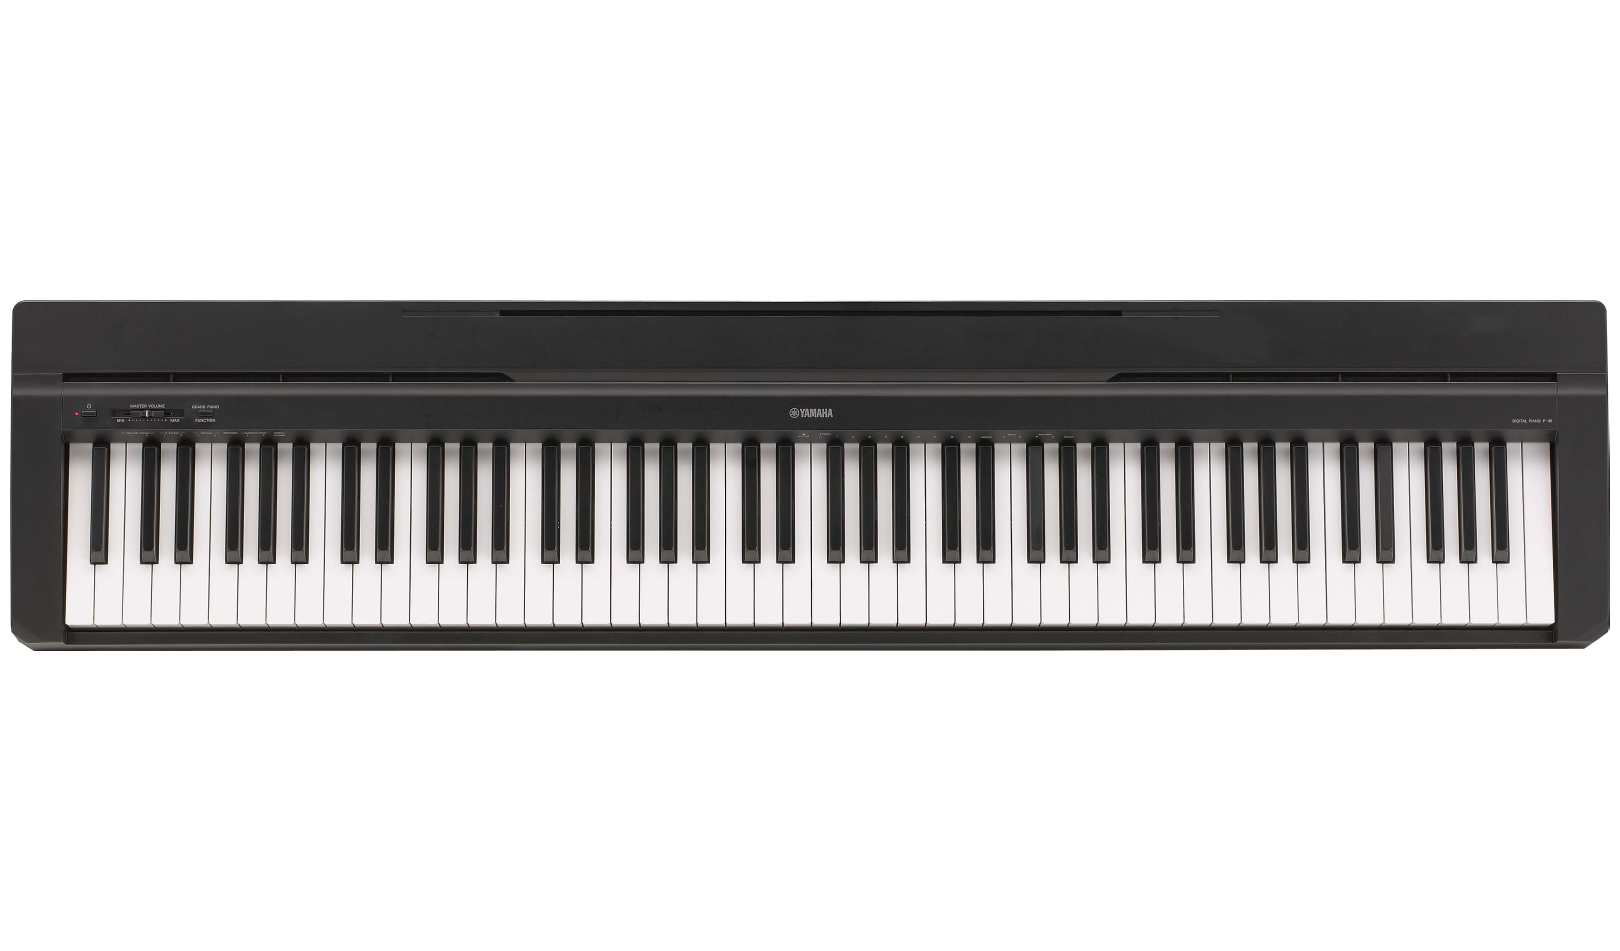 Цифровое фортепиано Yamaha P-45B